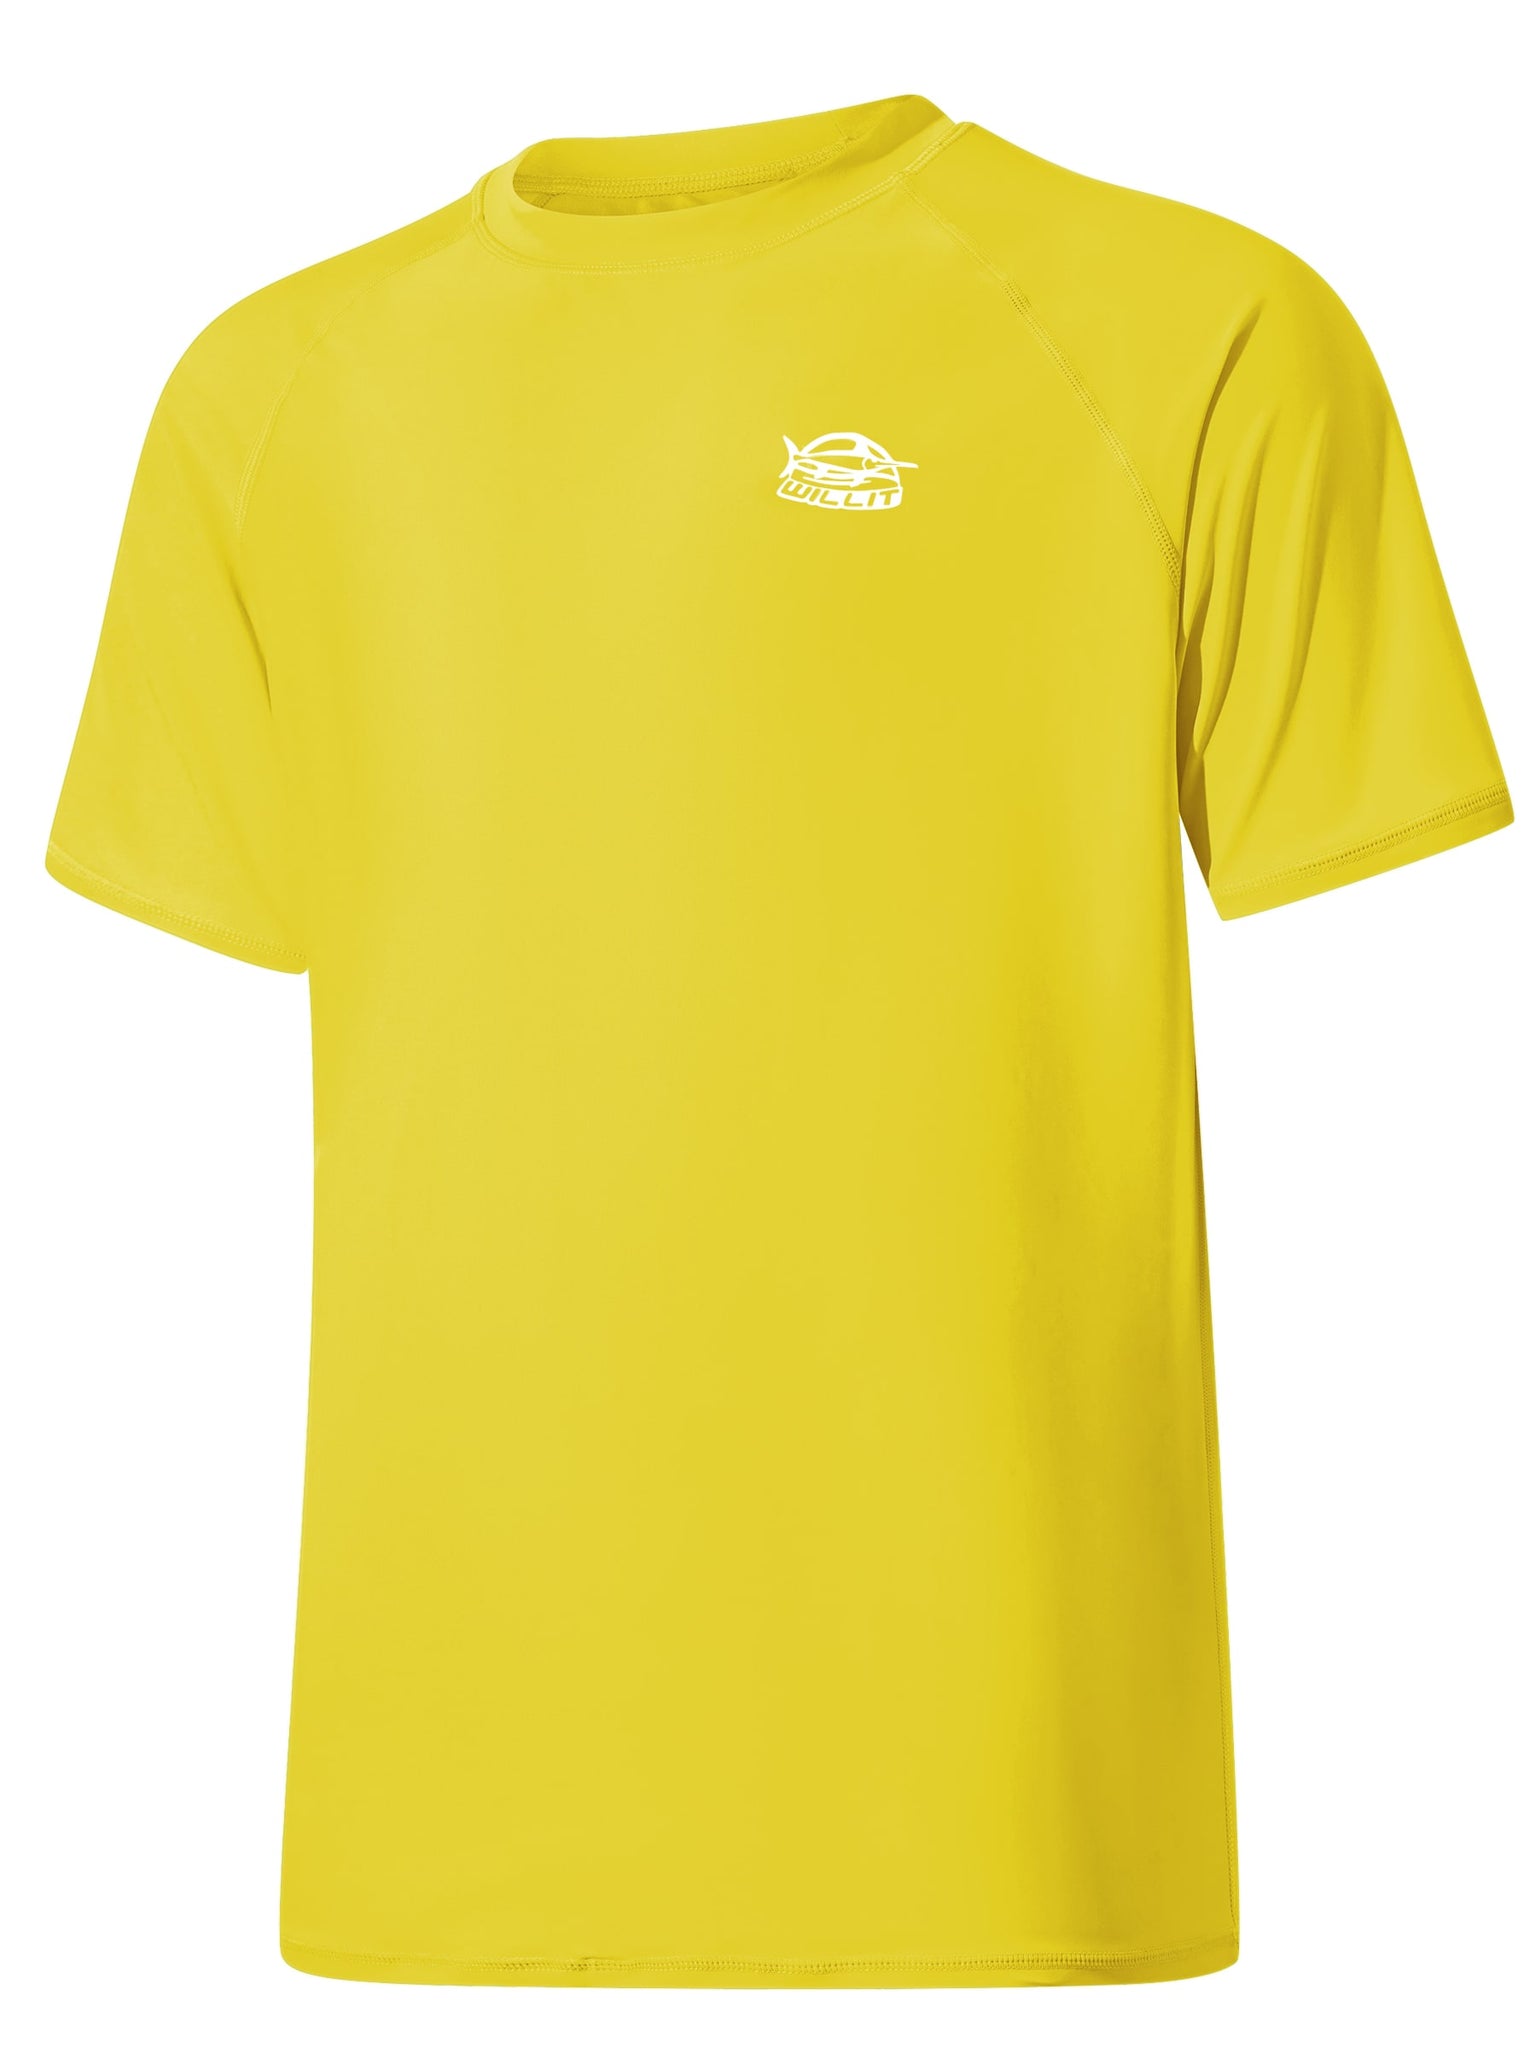 Men's Sun Protection Short Sleeve Shirt_Yellow_detail1